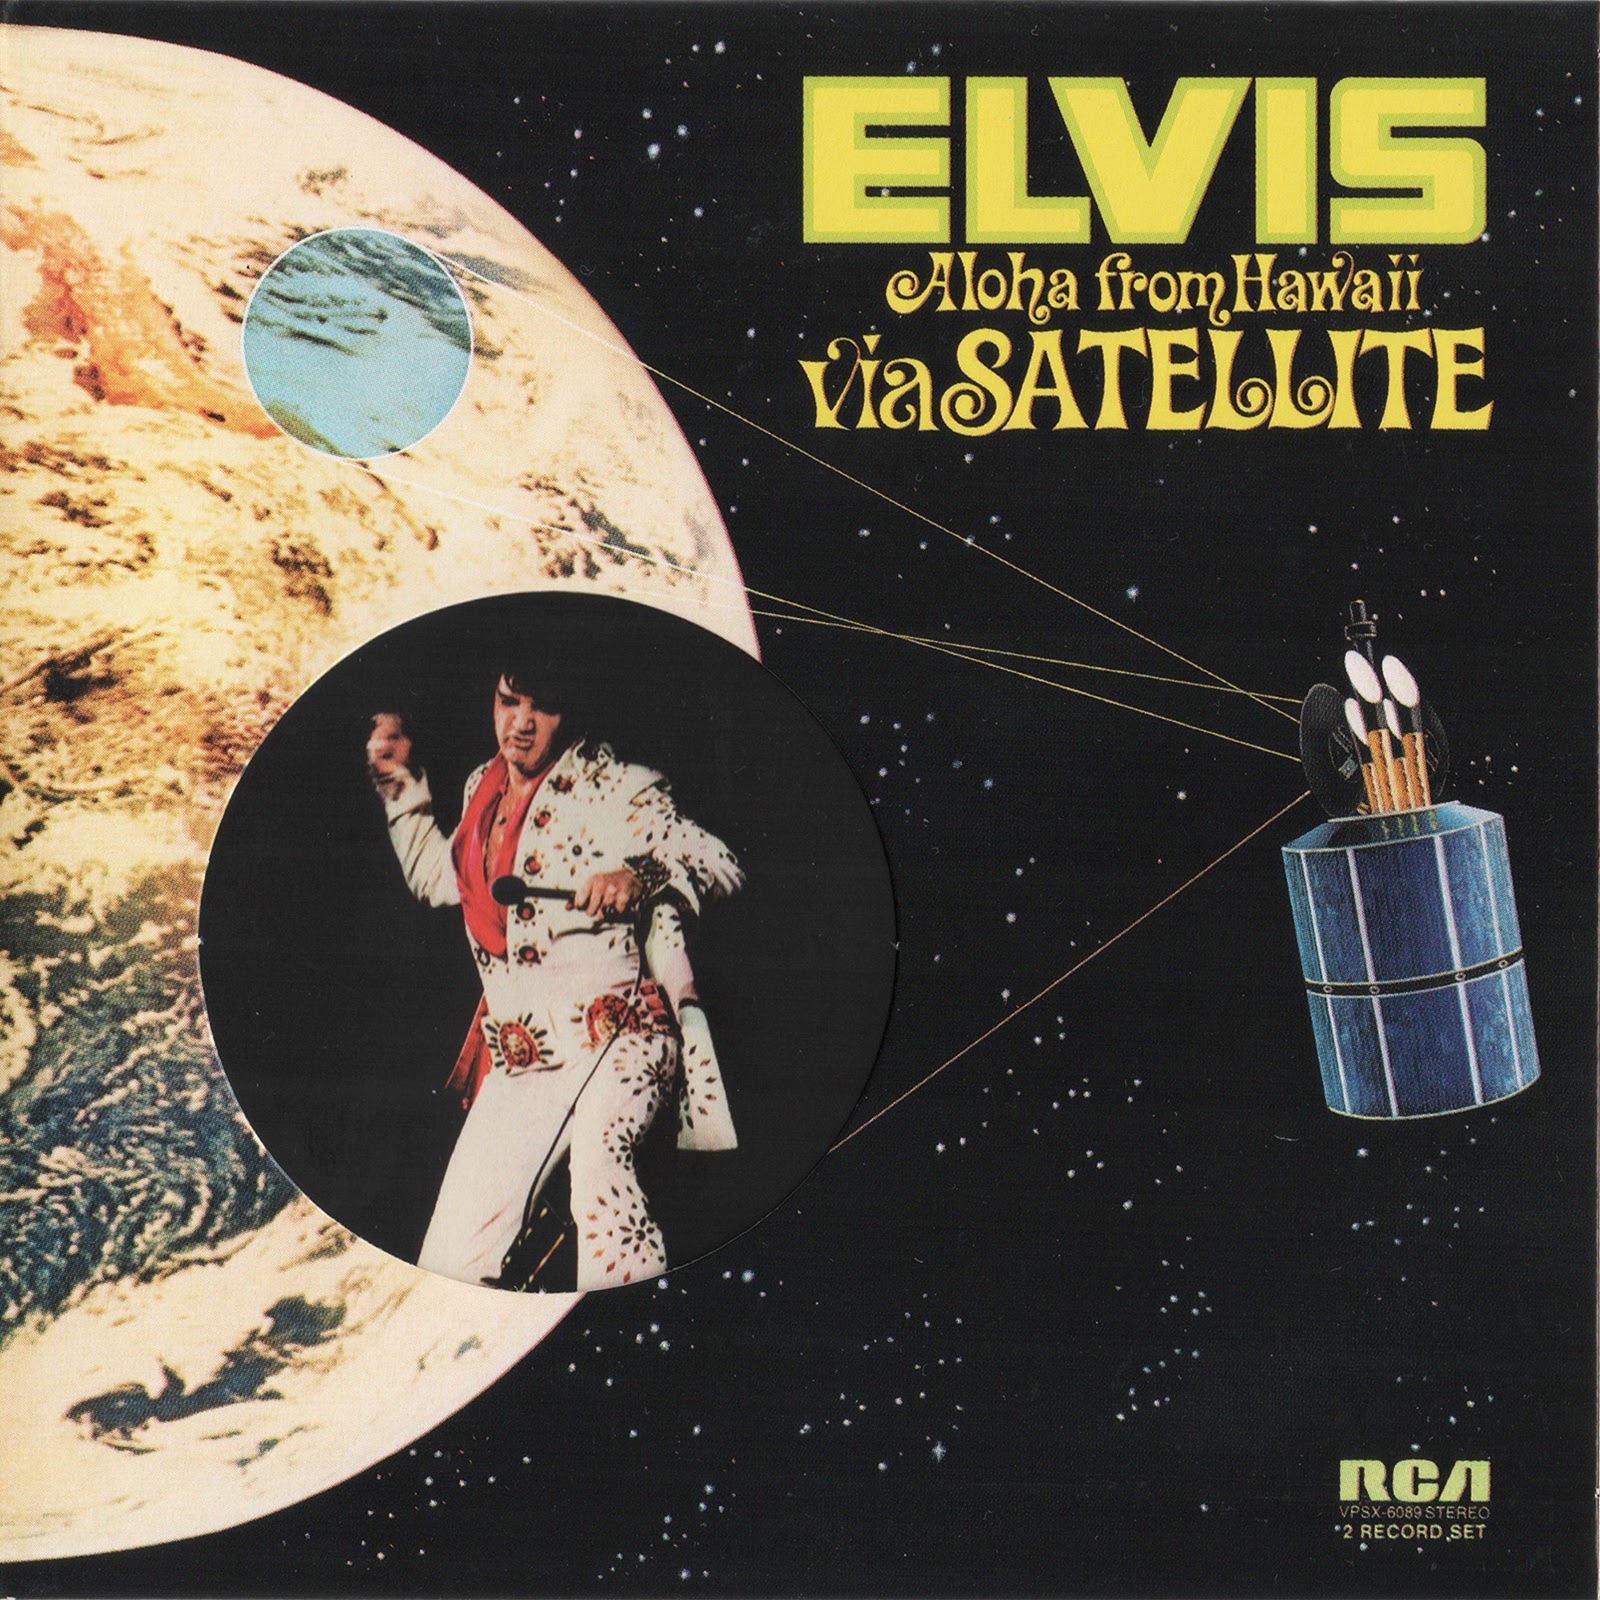 1973 Aloha From Hawaii Via Satellite - Elvis Presley (C.D 2016 E.U RCA Records VPSX-6098-1)